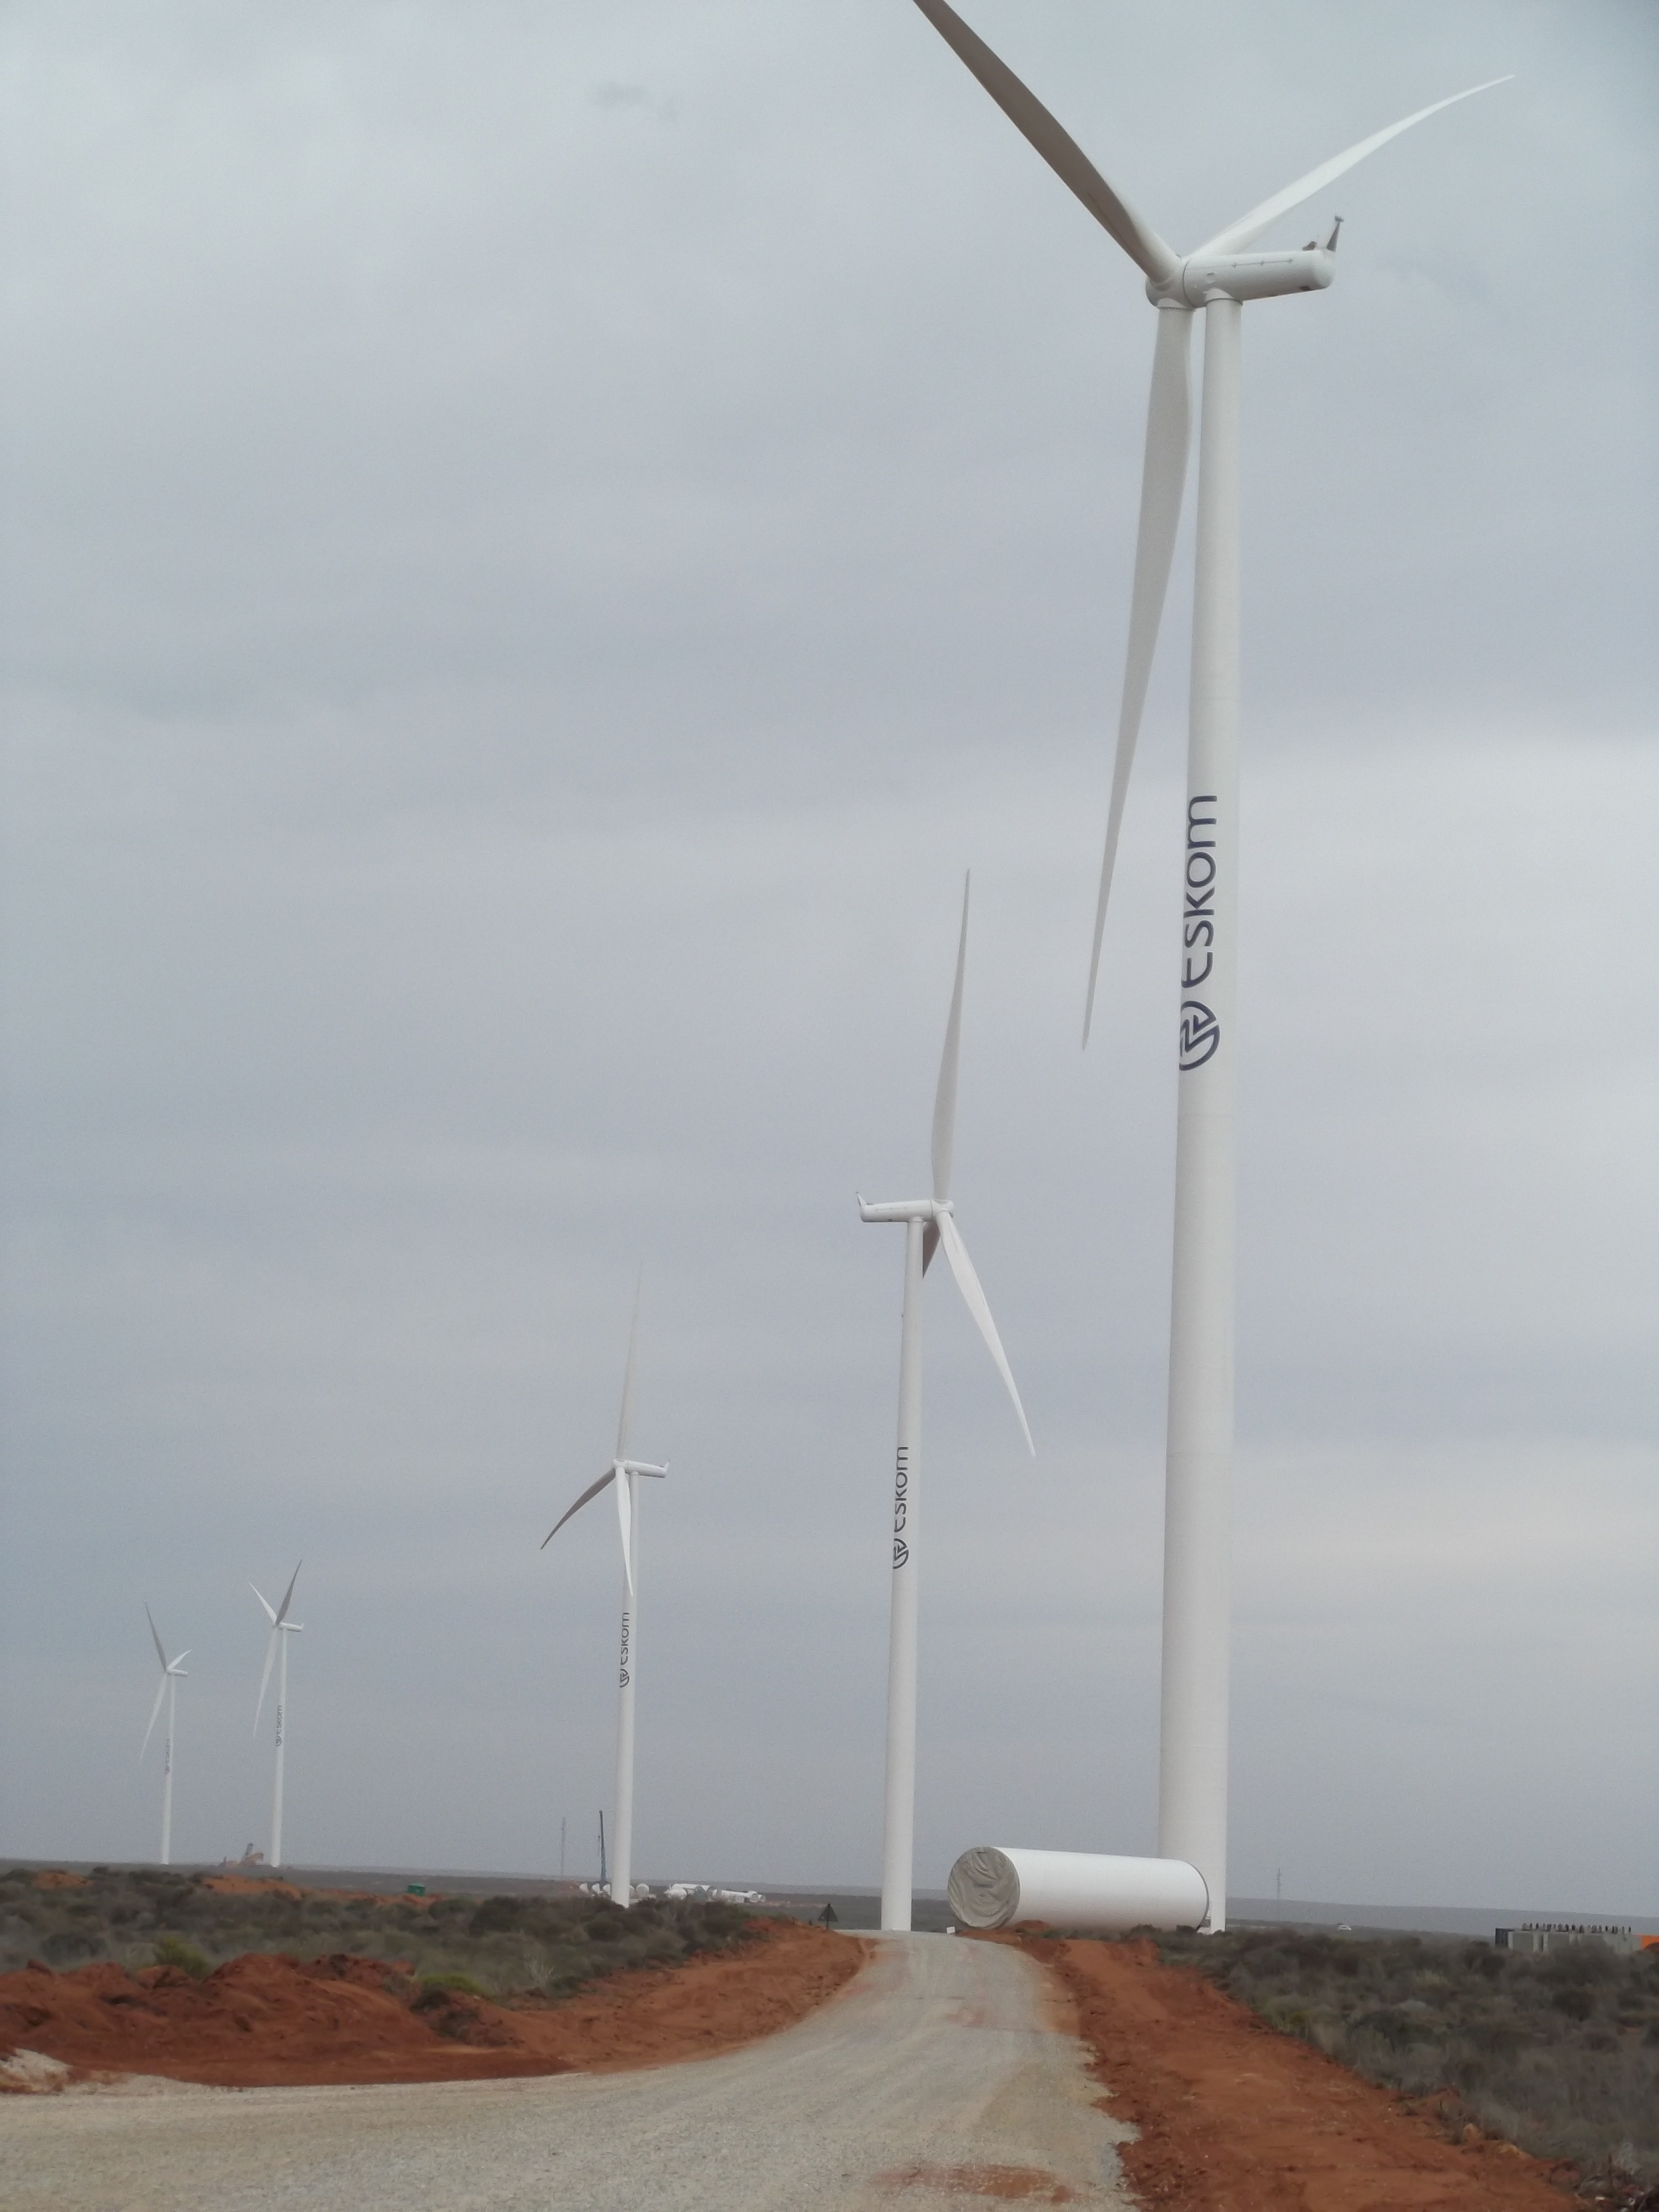 Sere wind farm, South Africa